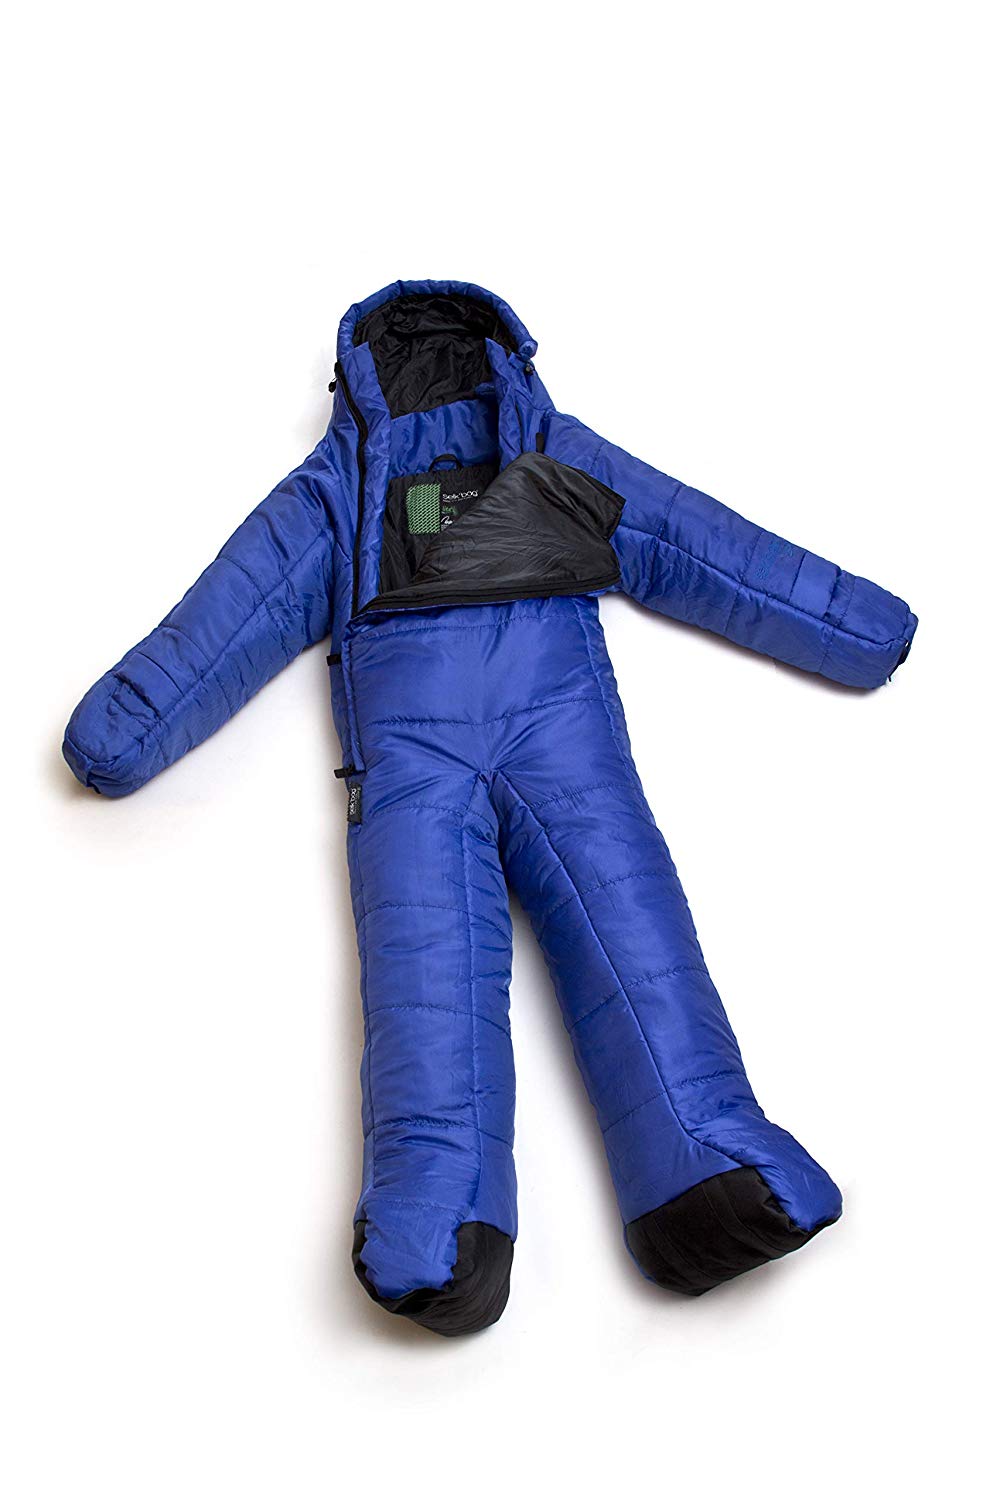 Selk’bag Unisex’s Lite Wearable Sleeping Bag with Arms and Legs, Dark ...